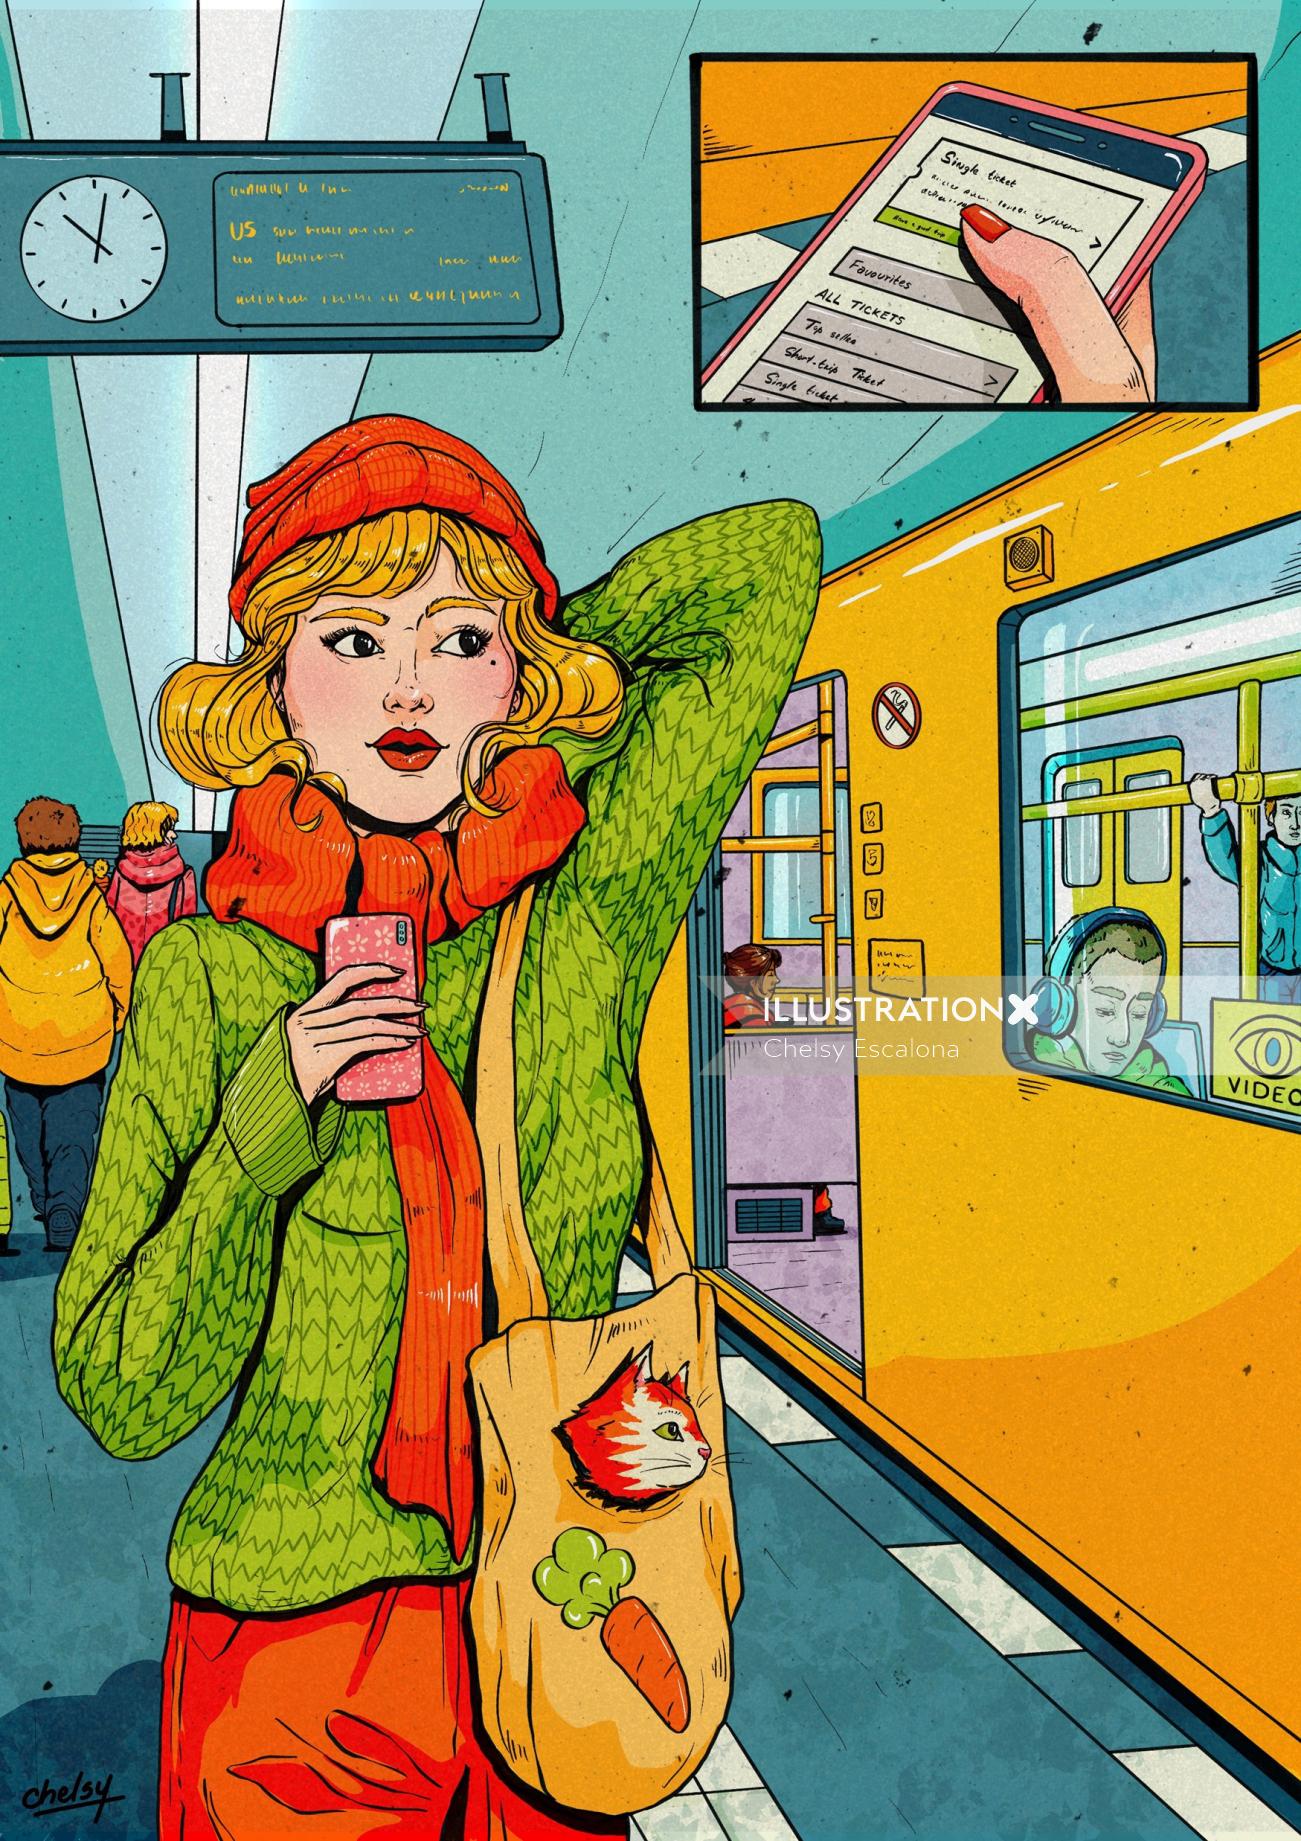 Comic strip about a train traveler